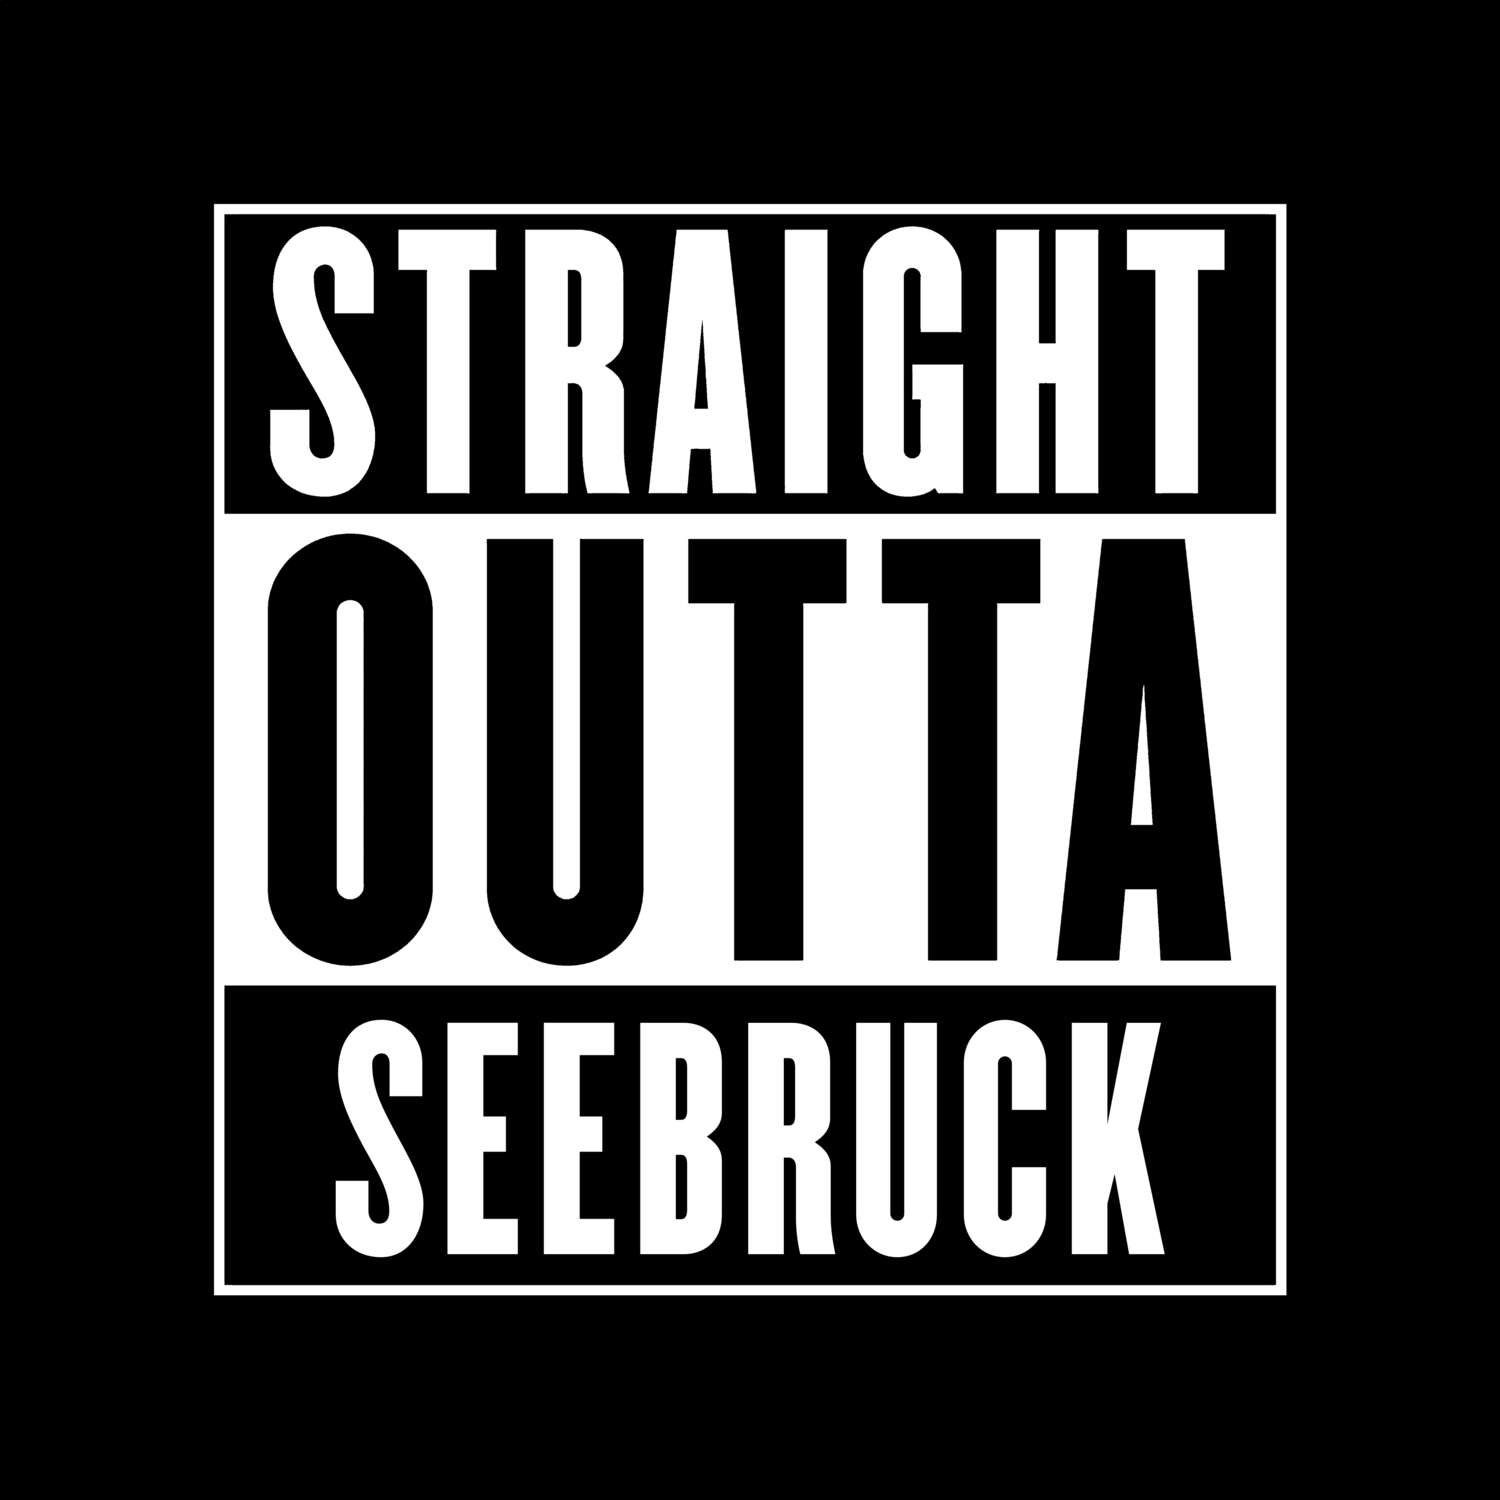 Seebruck T-Shirt »Straight Outta«